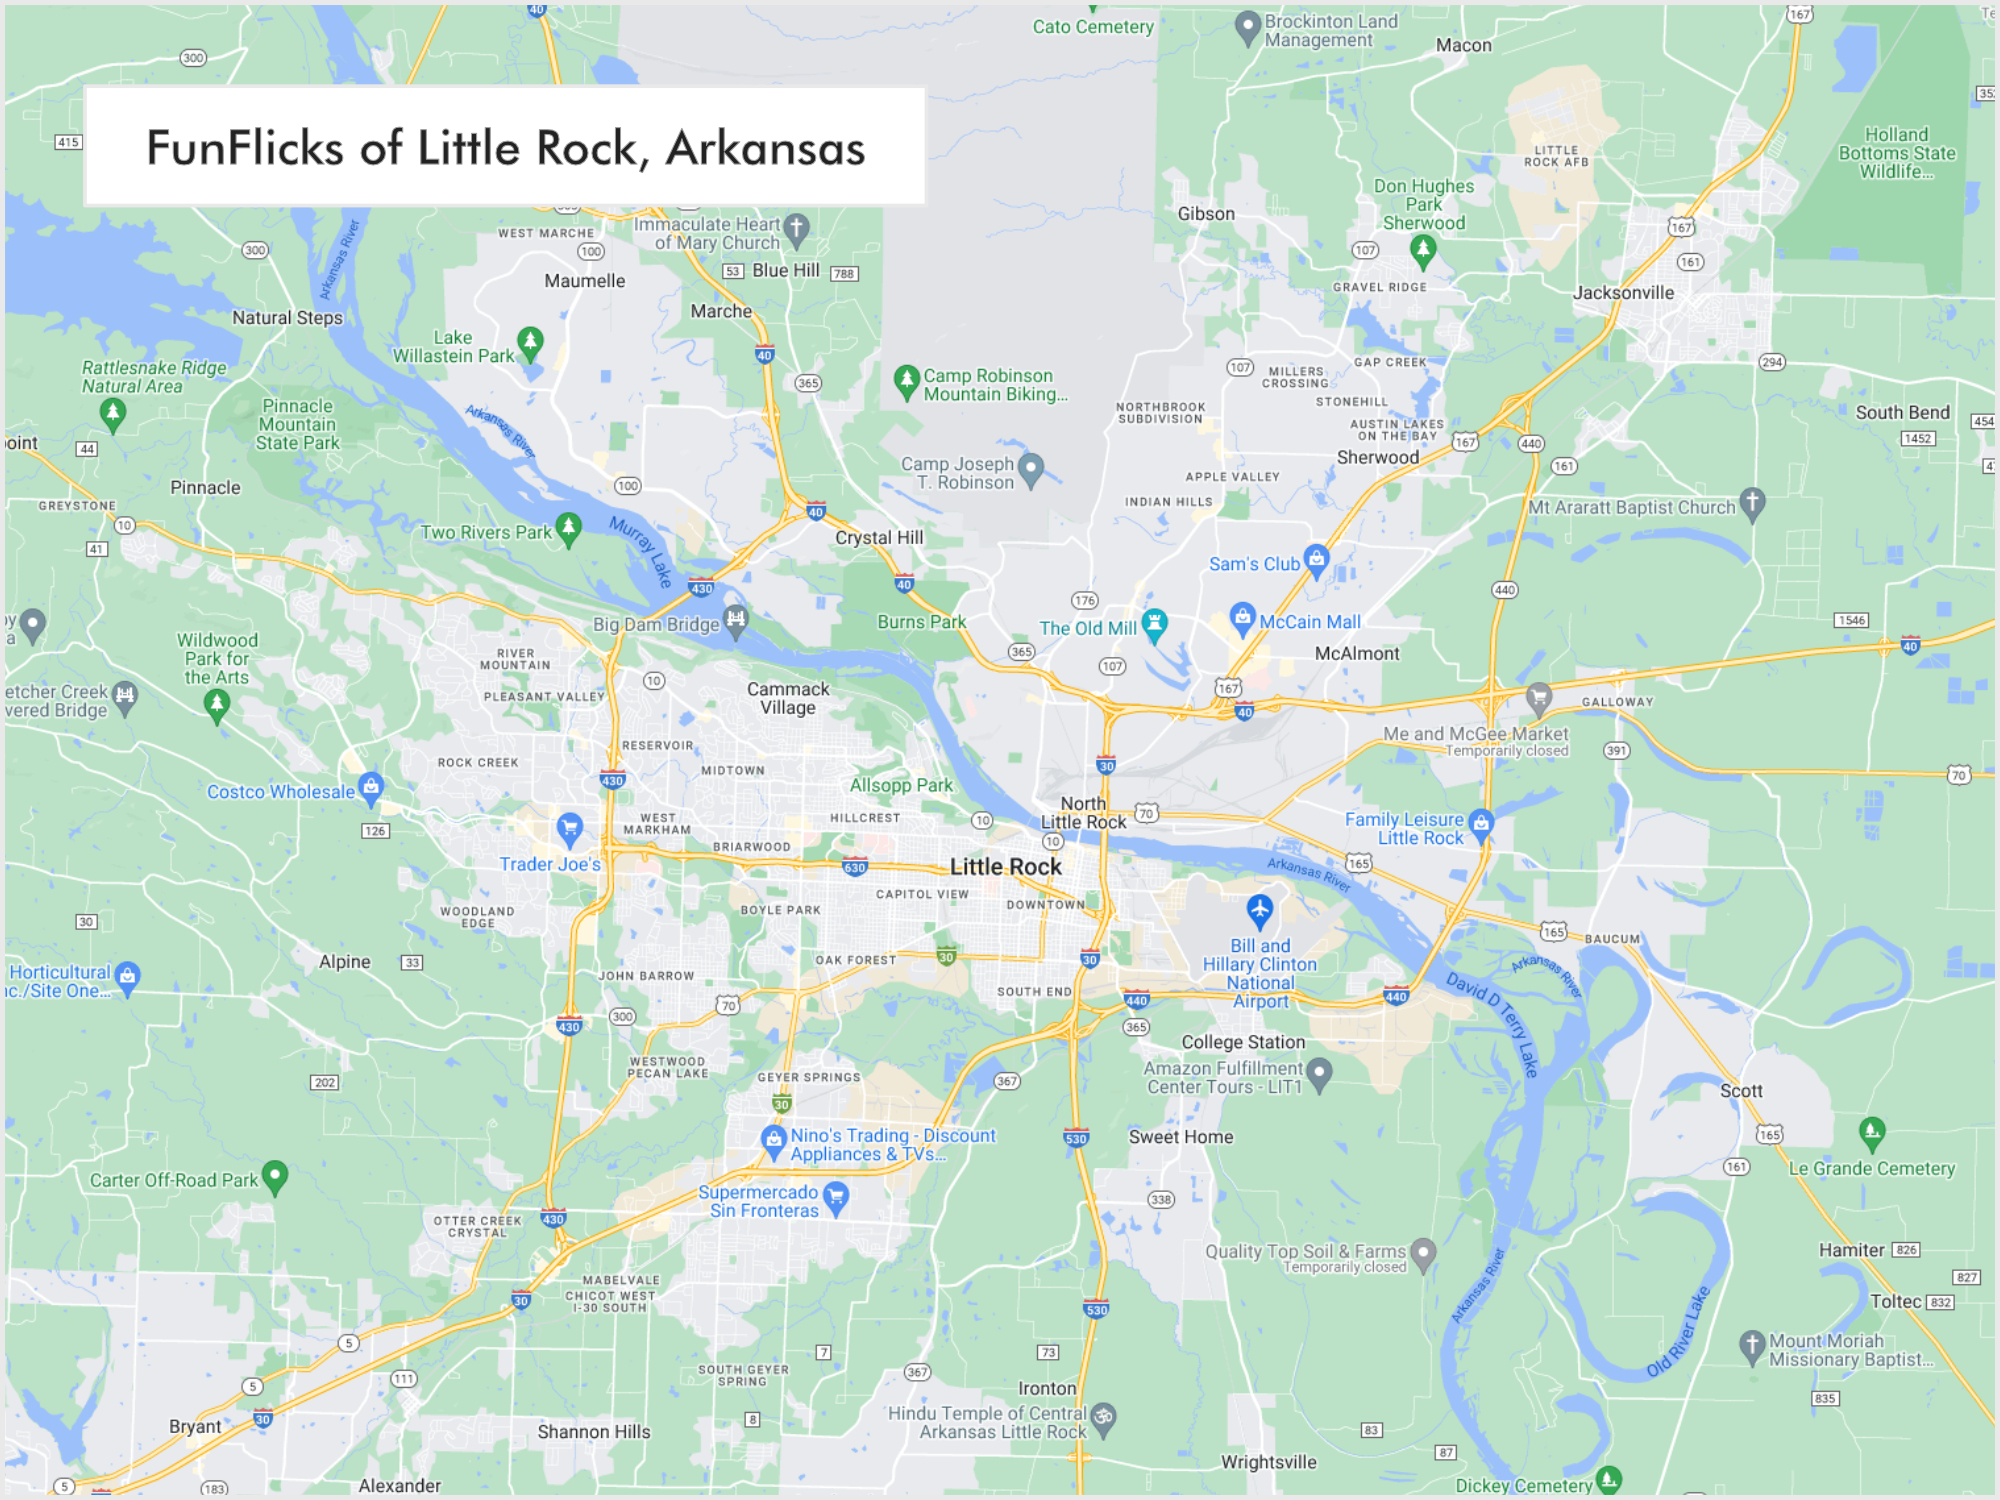 FunFlicks® Little Rock territory map